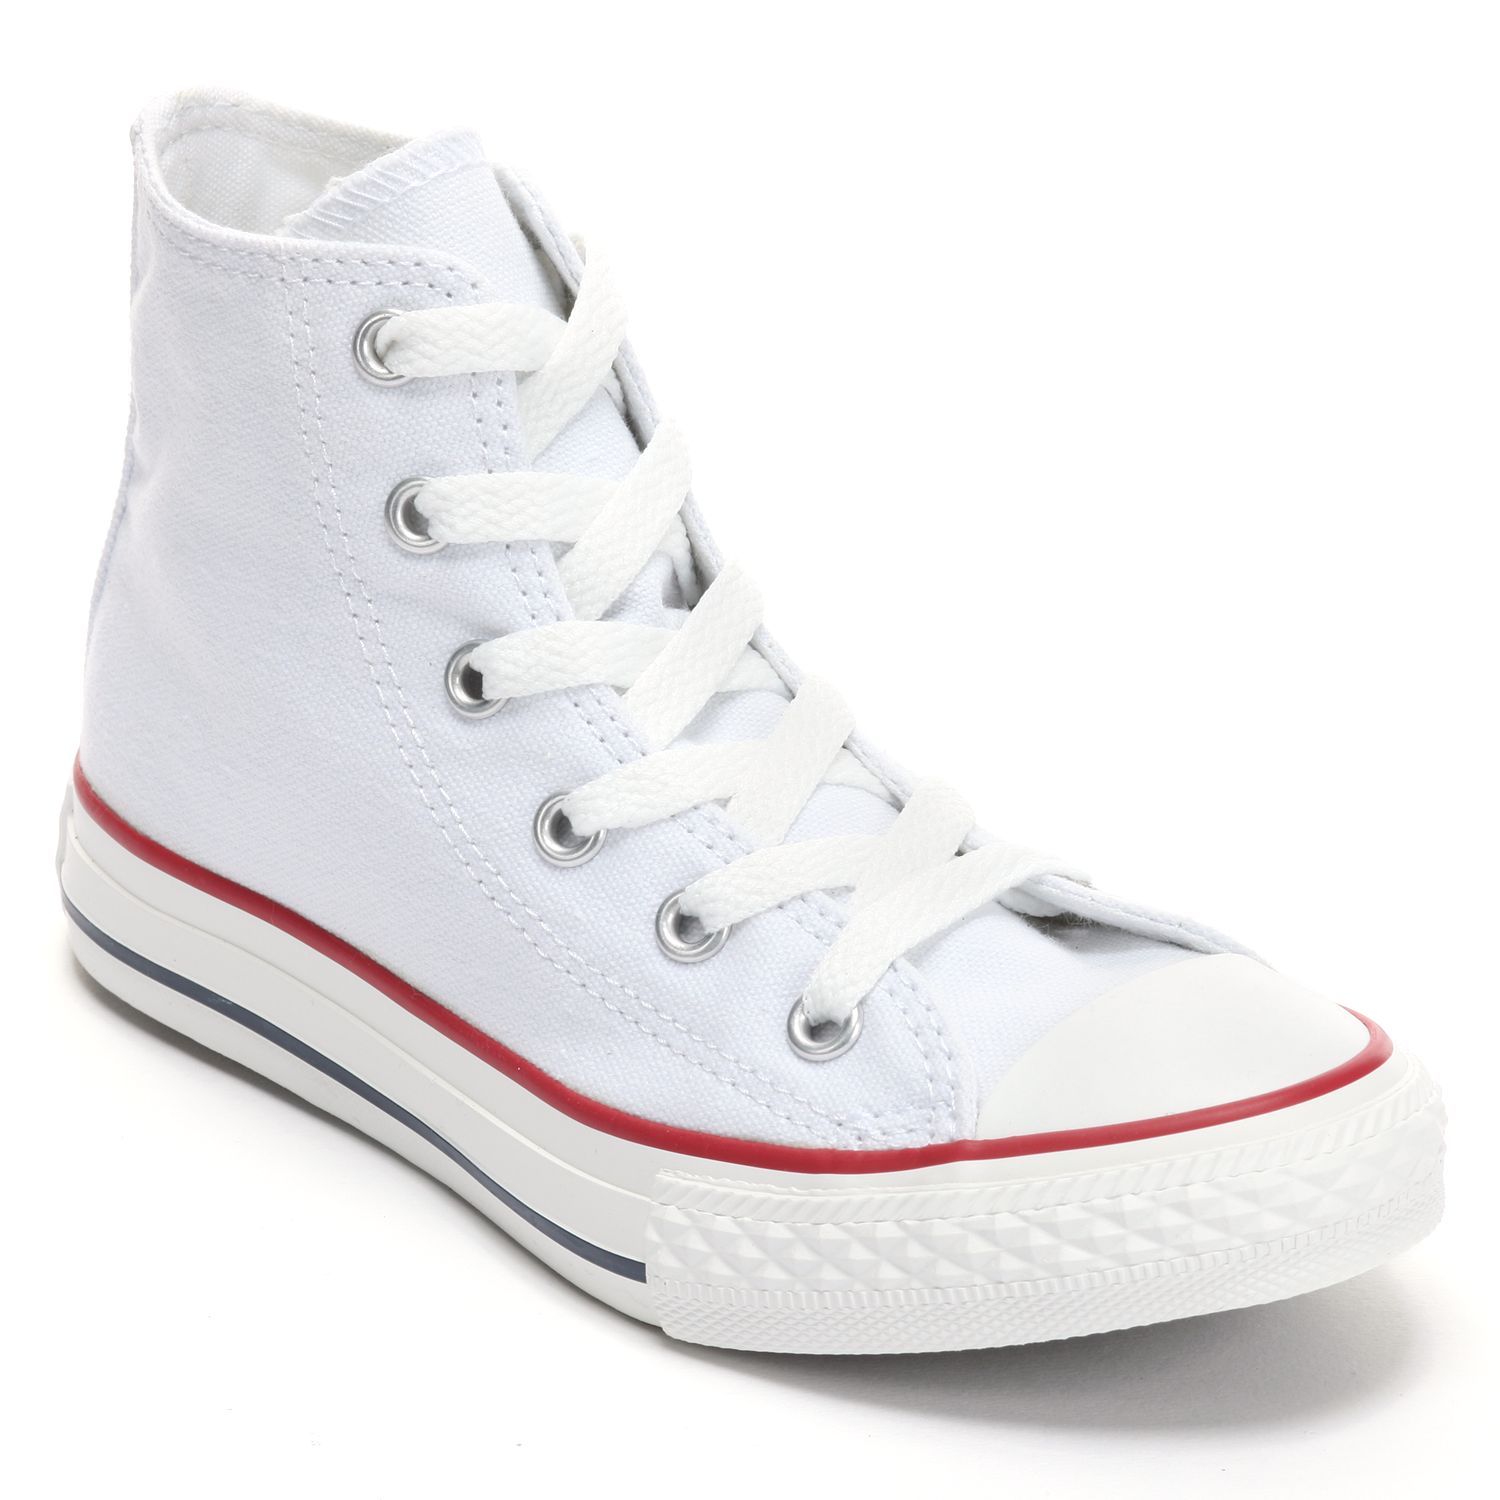 white converse size 4.5